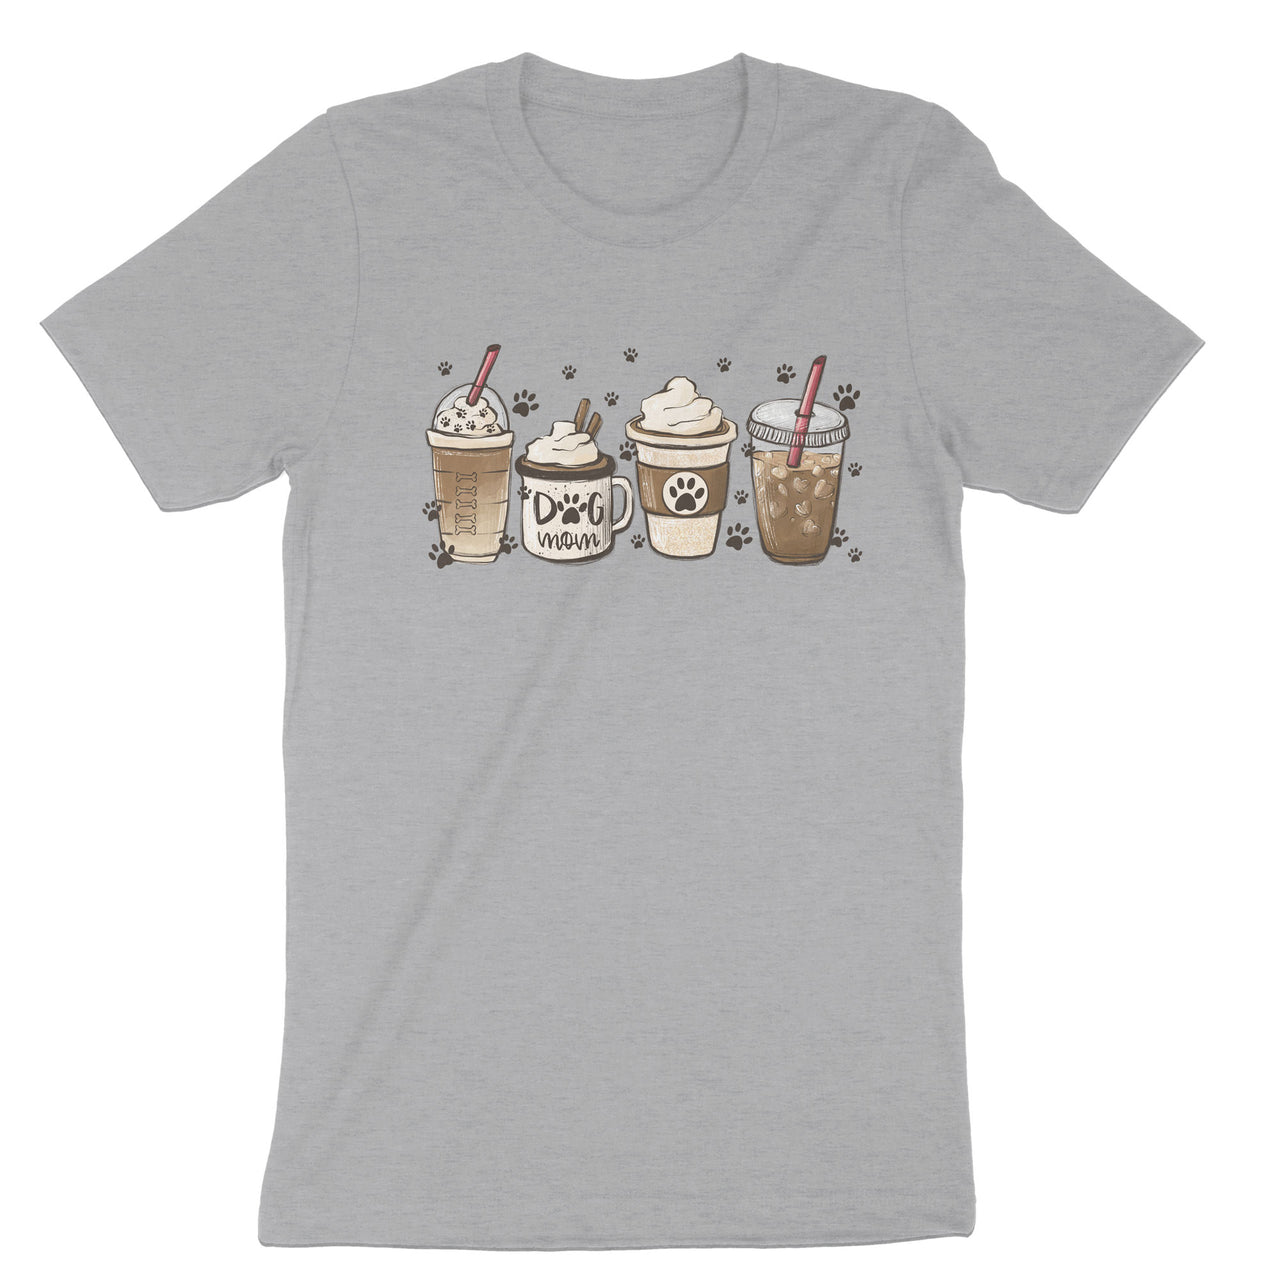 Coffee and Dogs T-Shirt, Iced Coffee Latte Dog Lover Tee Shirt